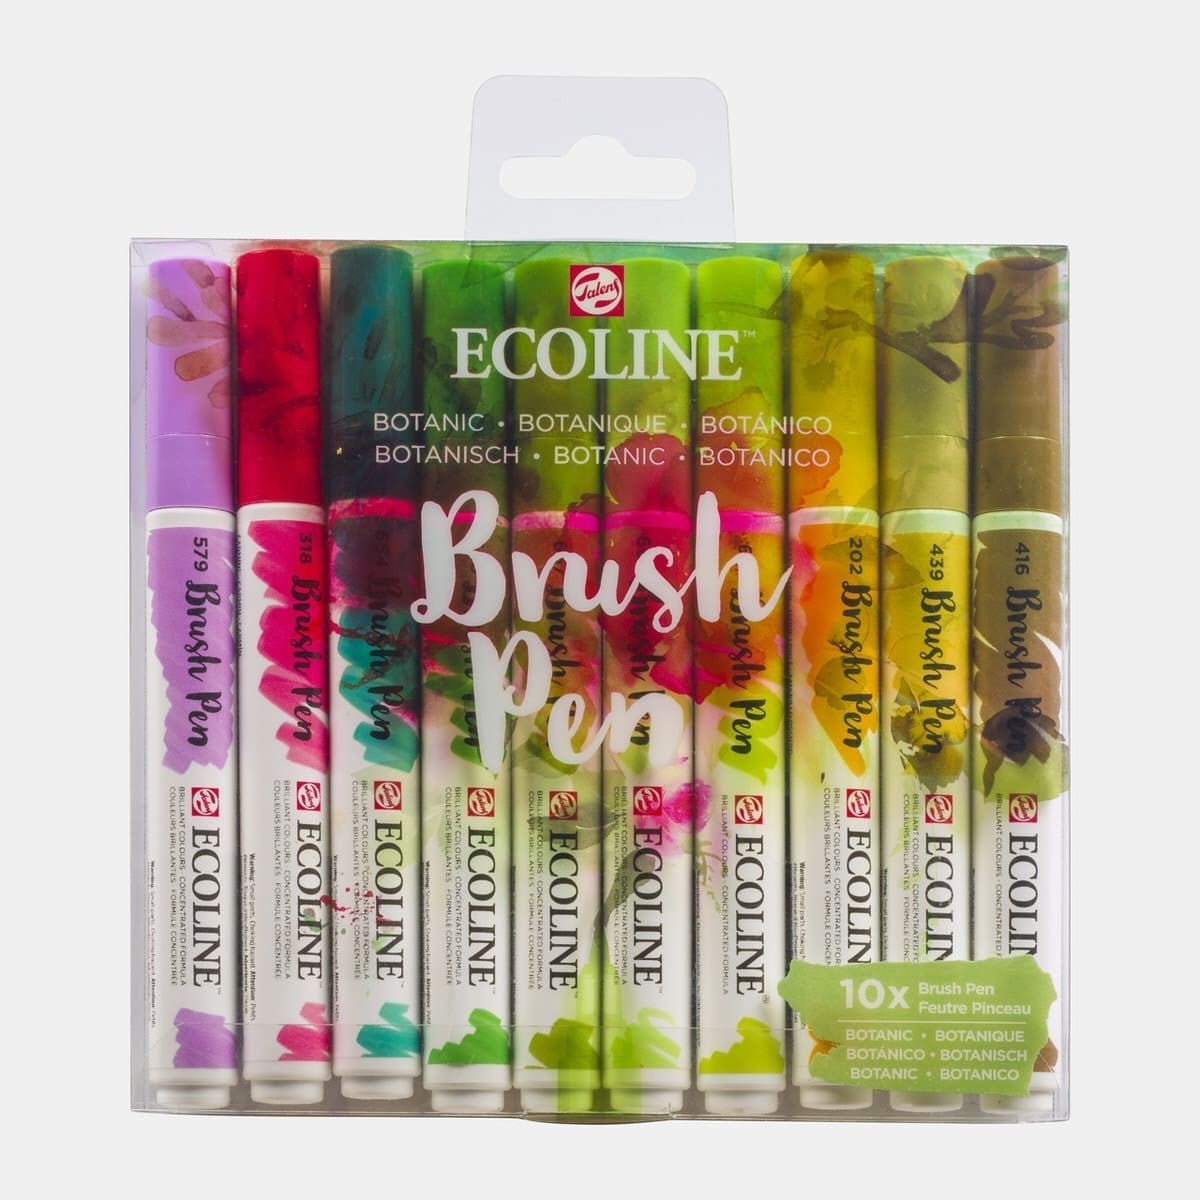 Ecoline Brush Pen 10-set - Botanic - Royal Talens - Tidformera